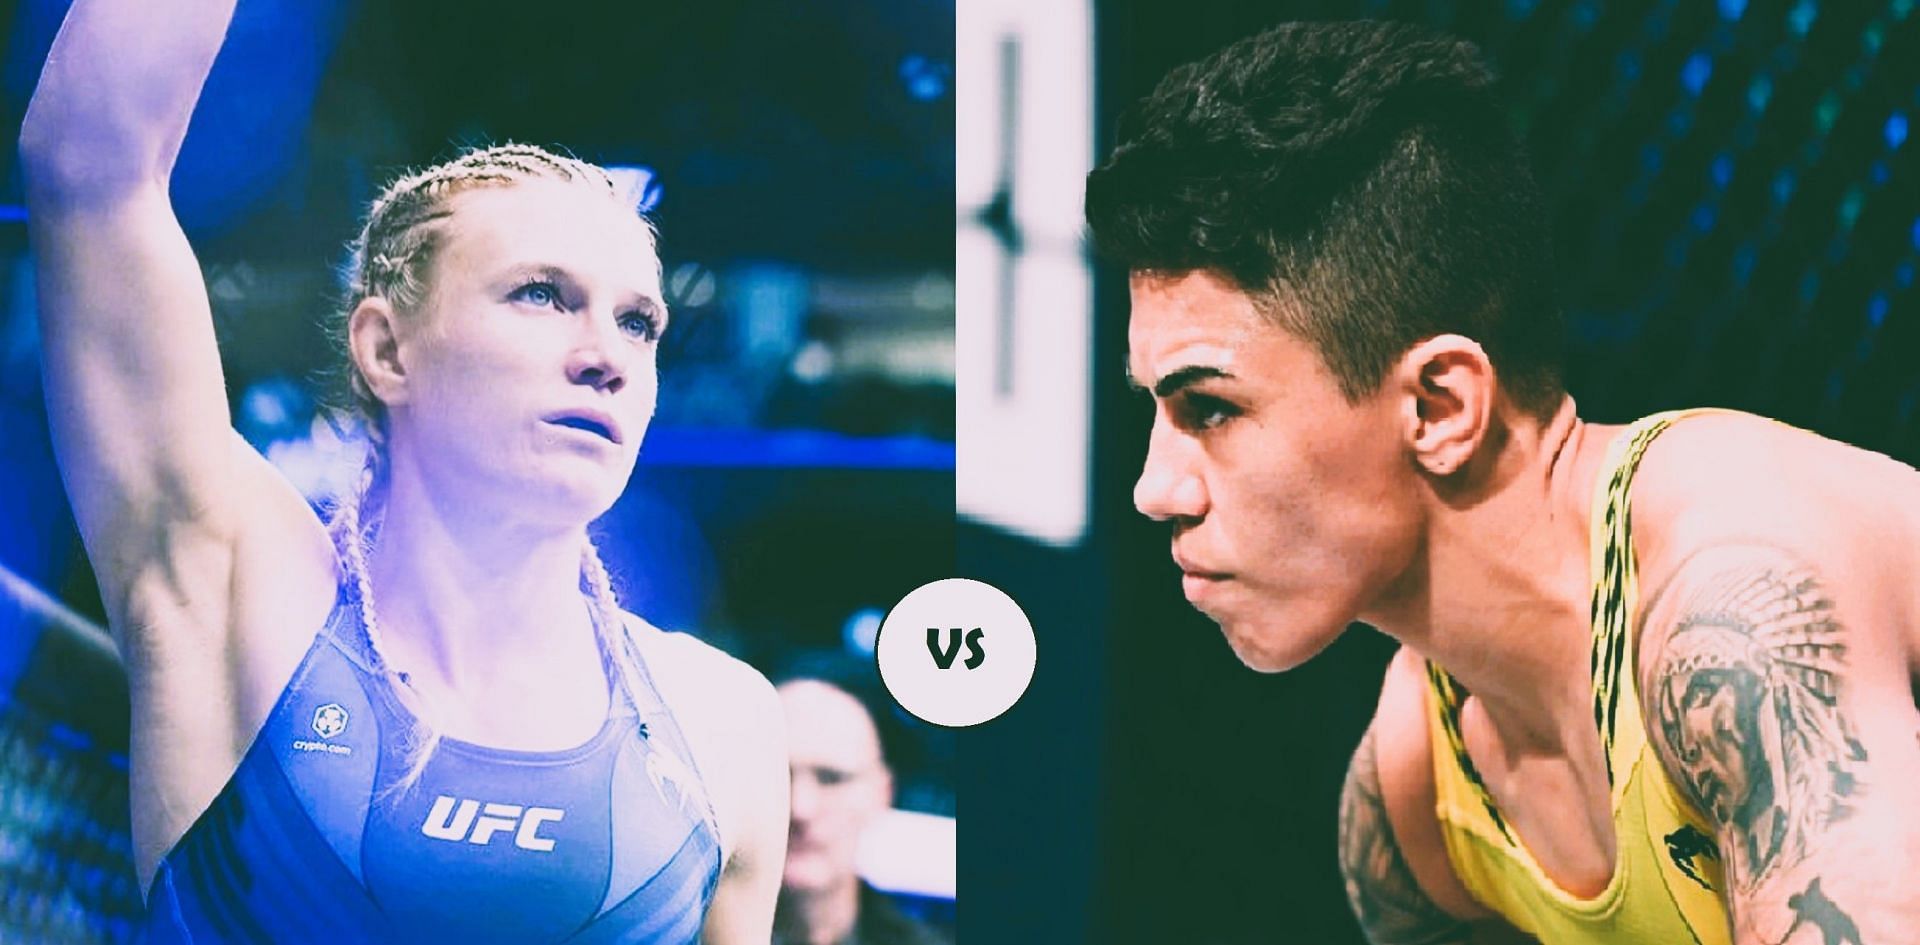 Fiorot vs. Andrade [Images via @manonfiorot_mma &amp; @jessicammapro on Instagram]